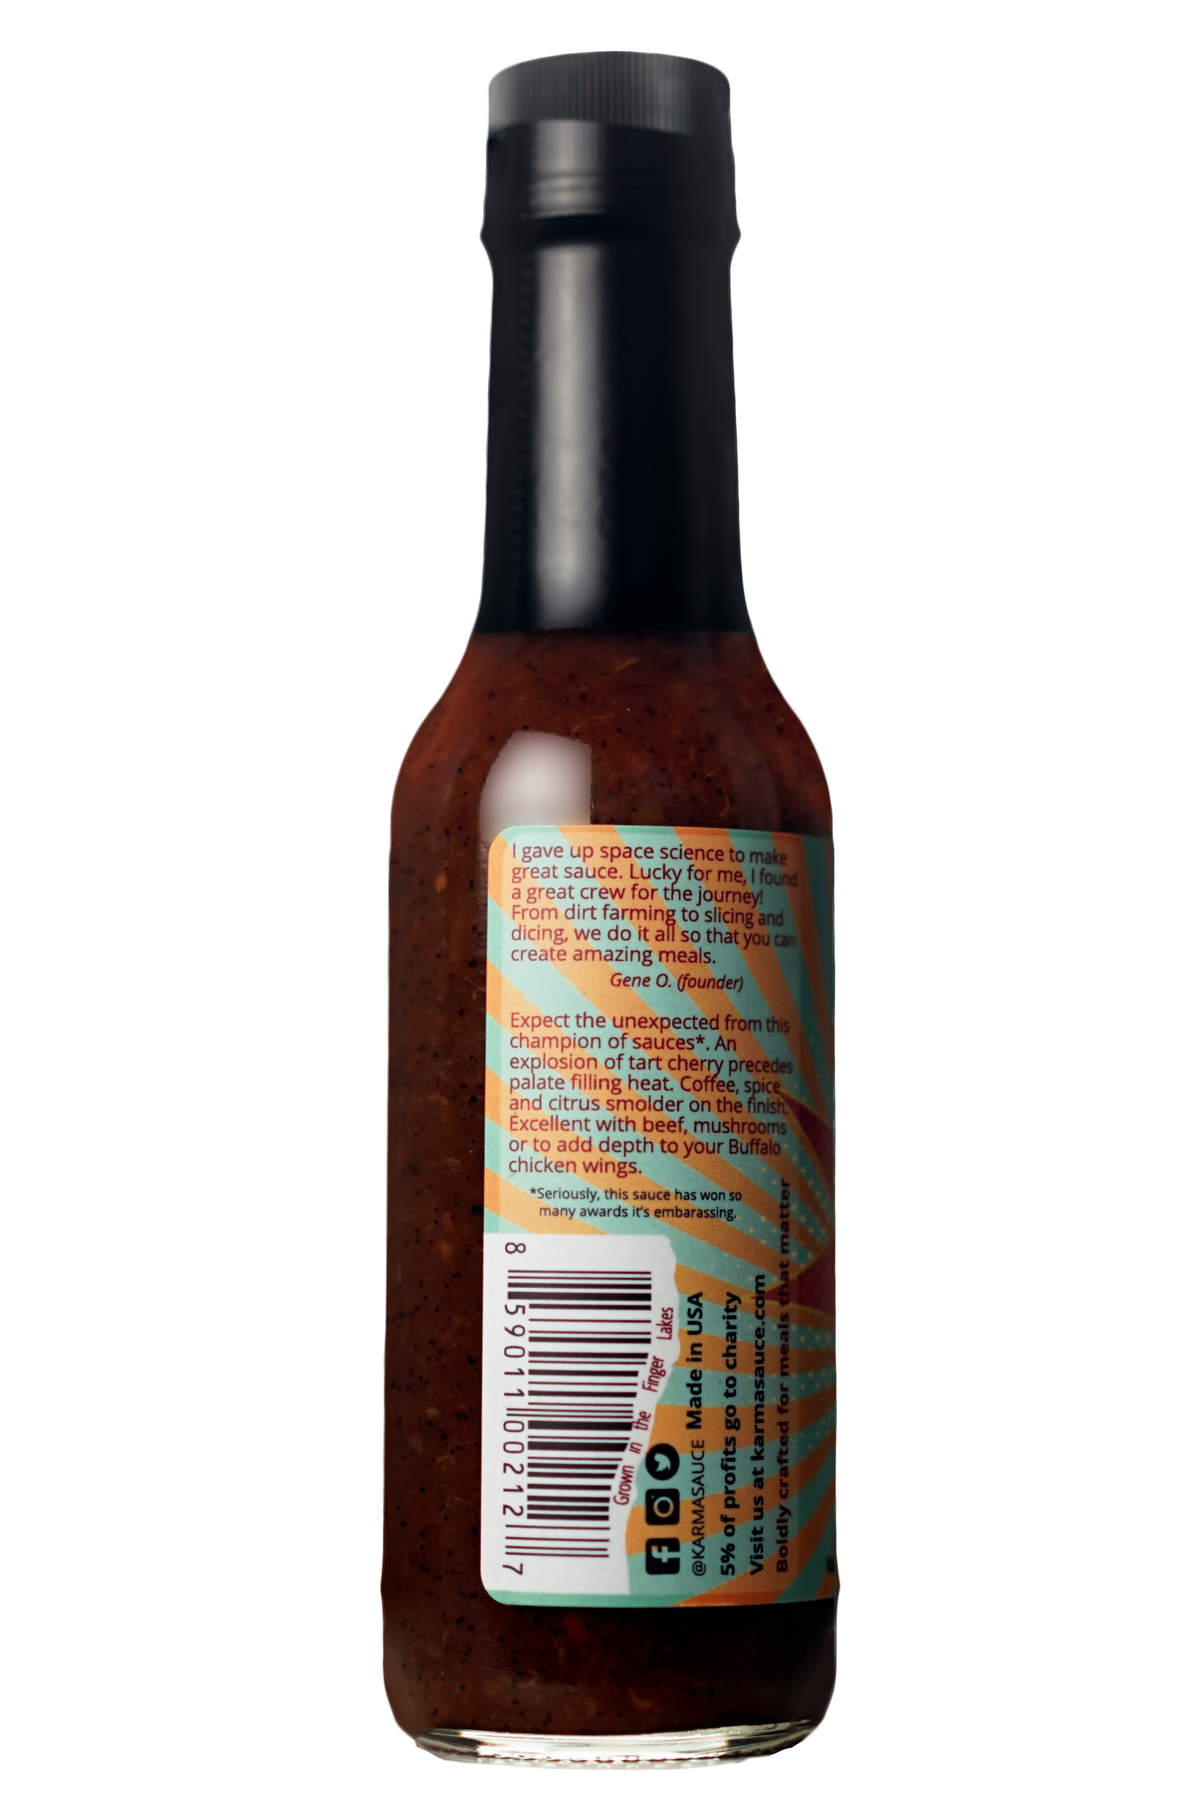 The Original Louisiana Brand Hot Sauce, brings the heat to South